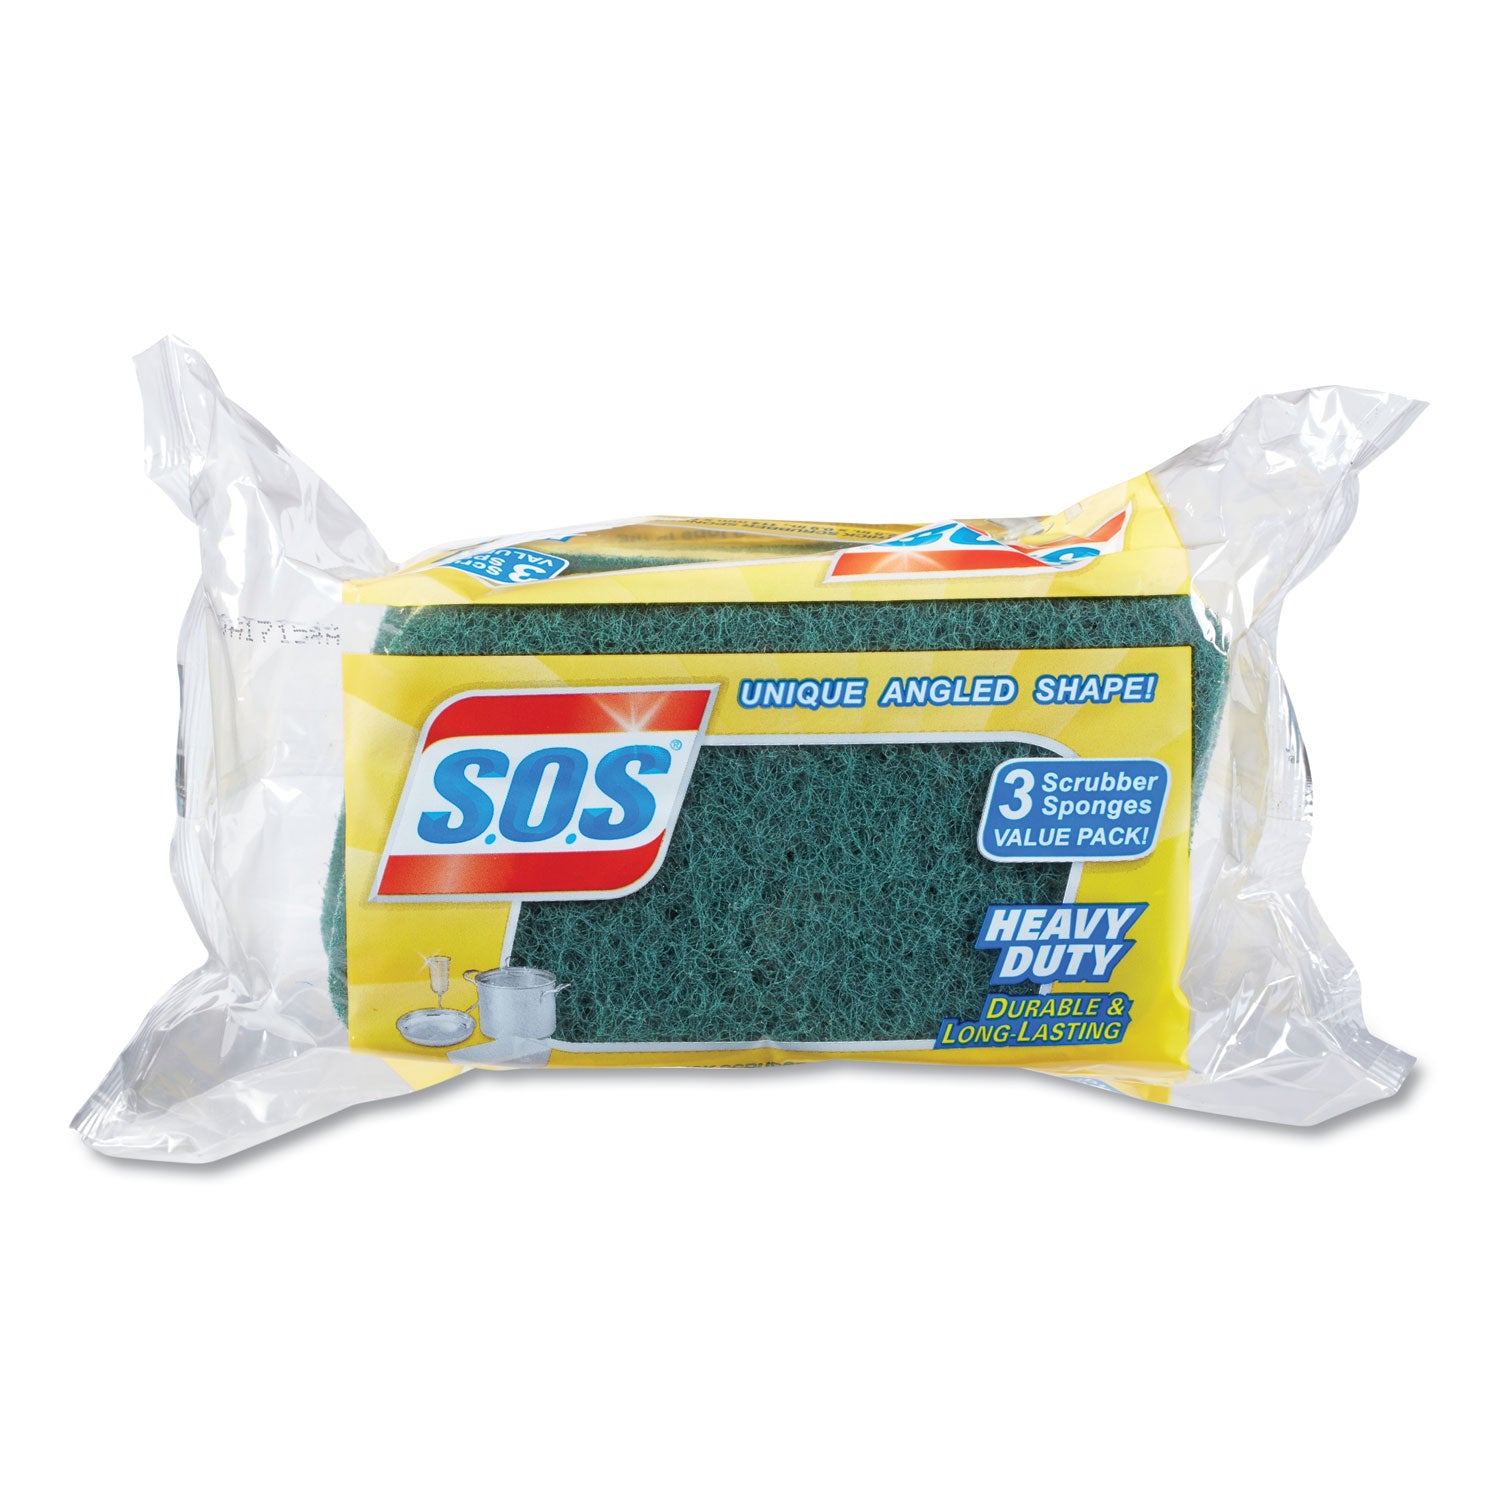 Heavy Duty Scrubber Sponge, 2.5 x 4.5, 0.9" Thick, Yellow/Green, 3/Pack, 8 Packs/Carton - 